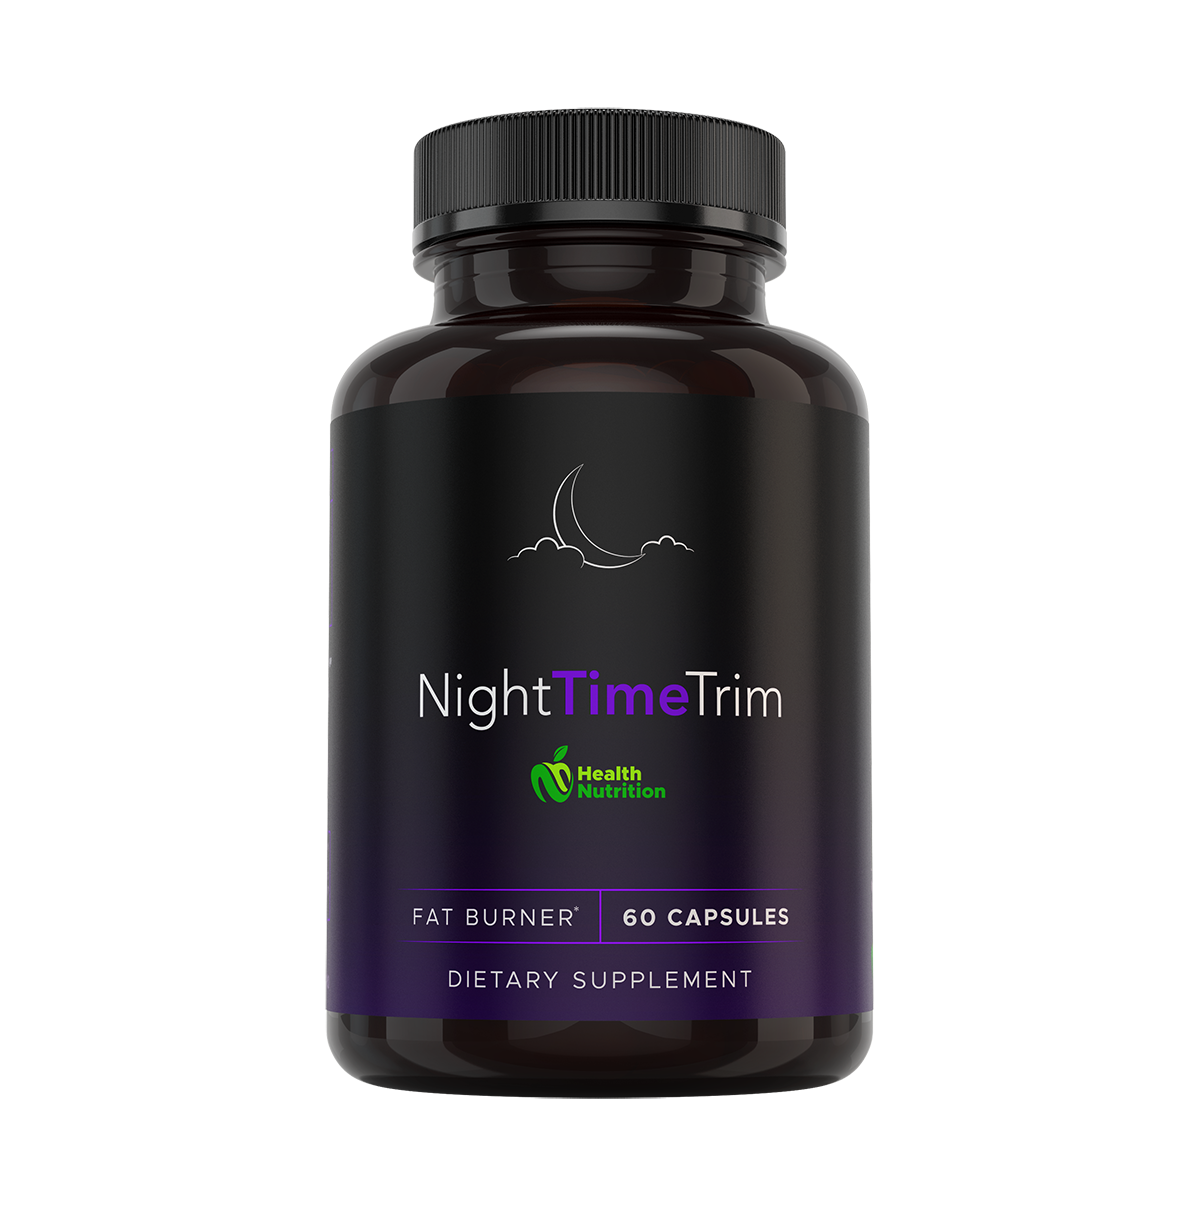 NightTimeTrim